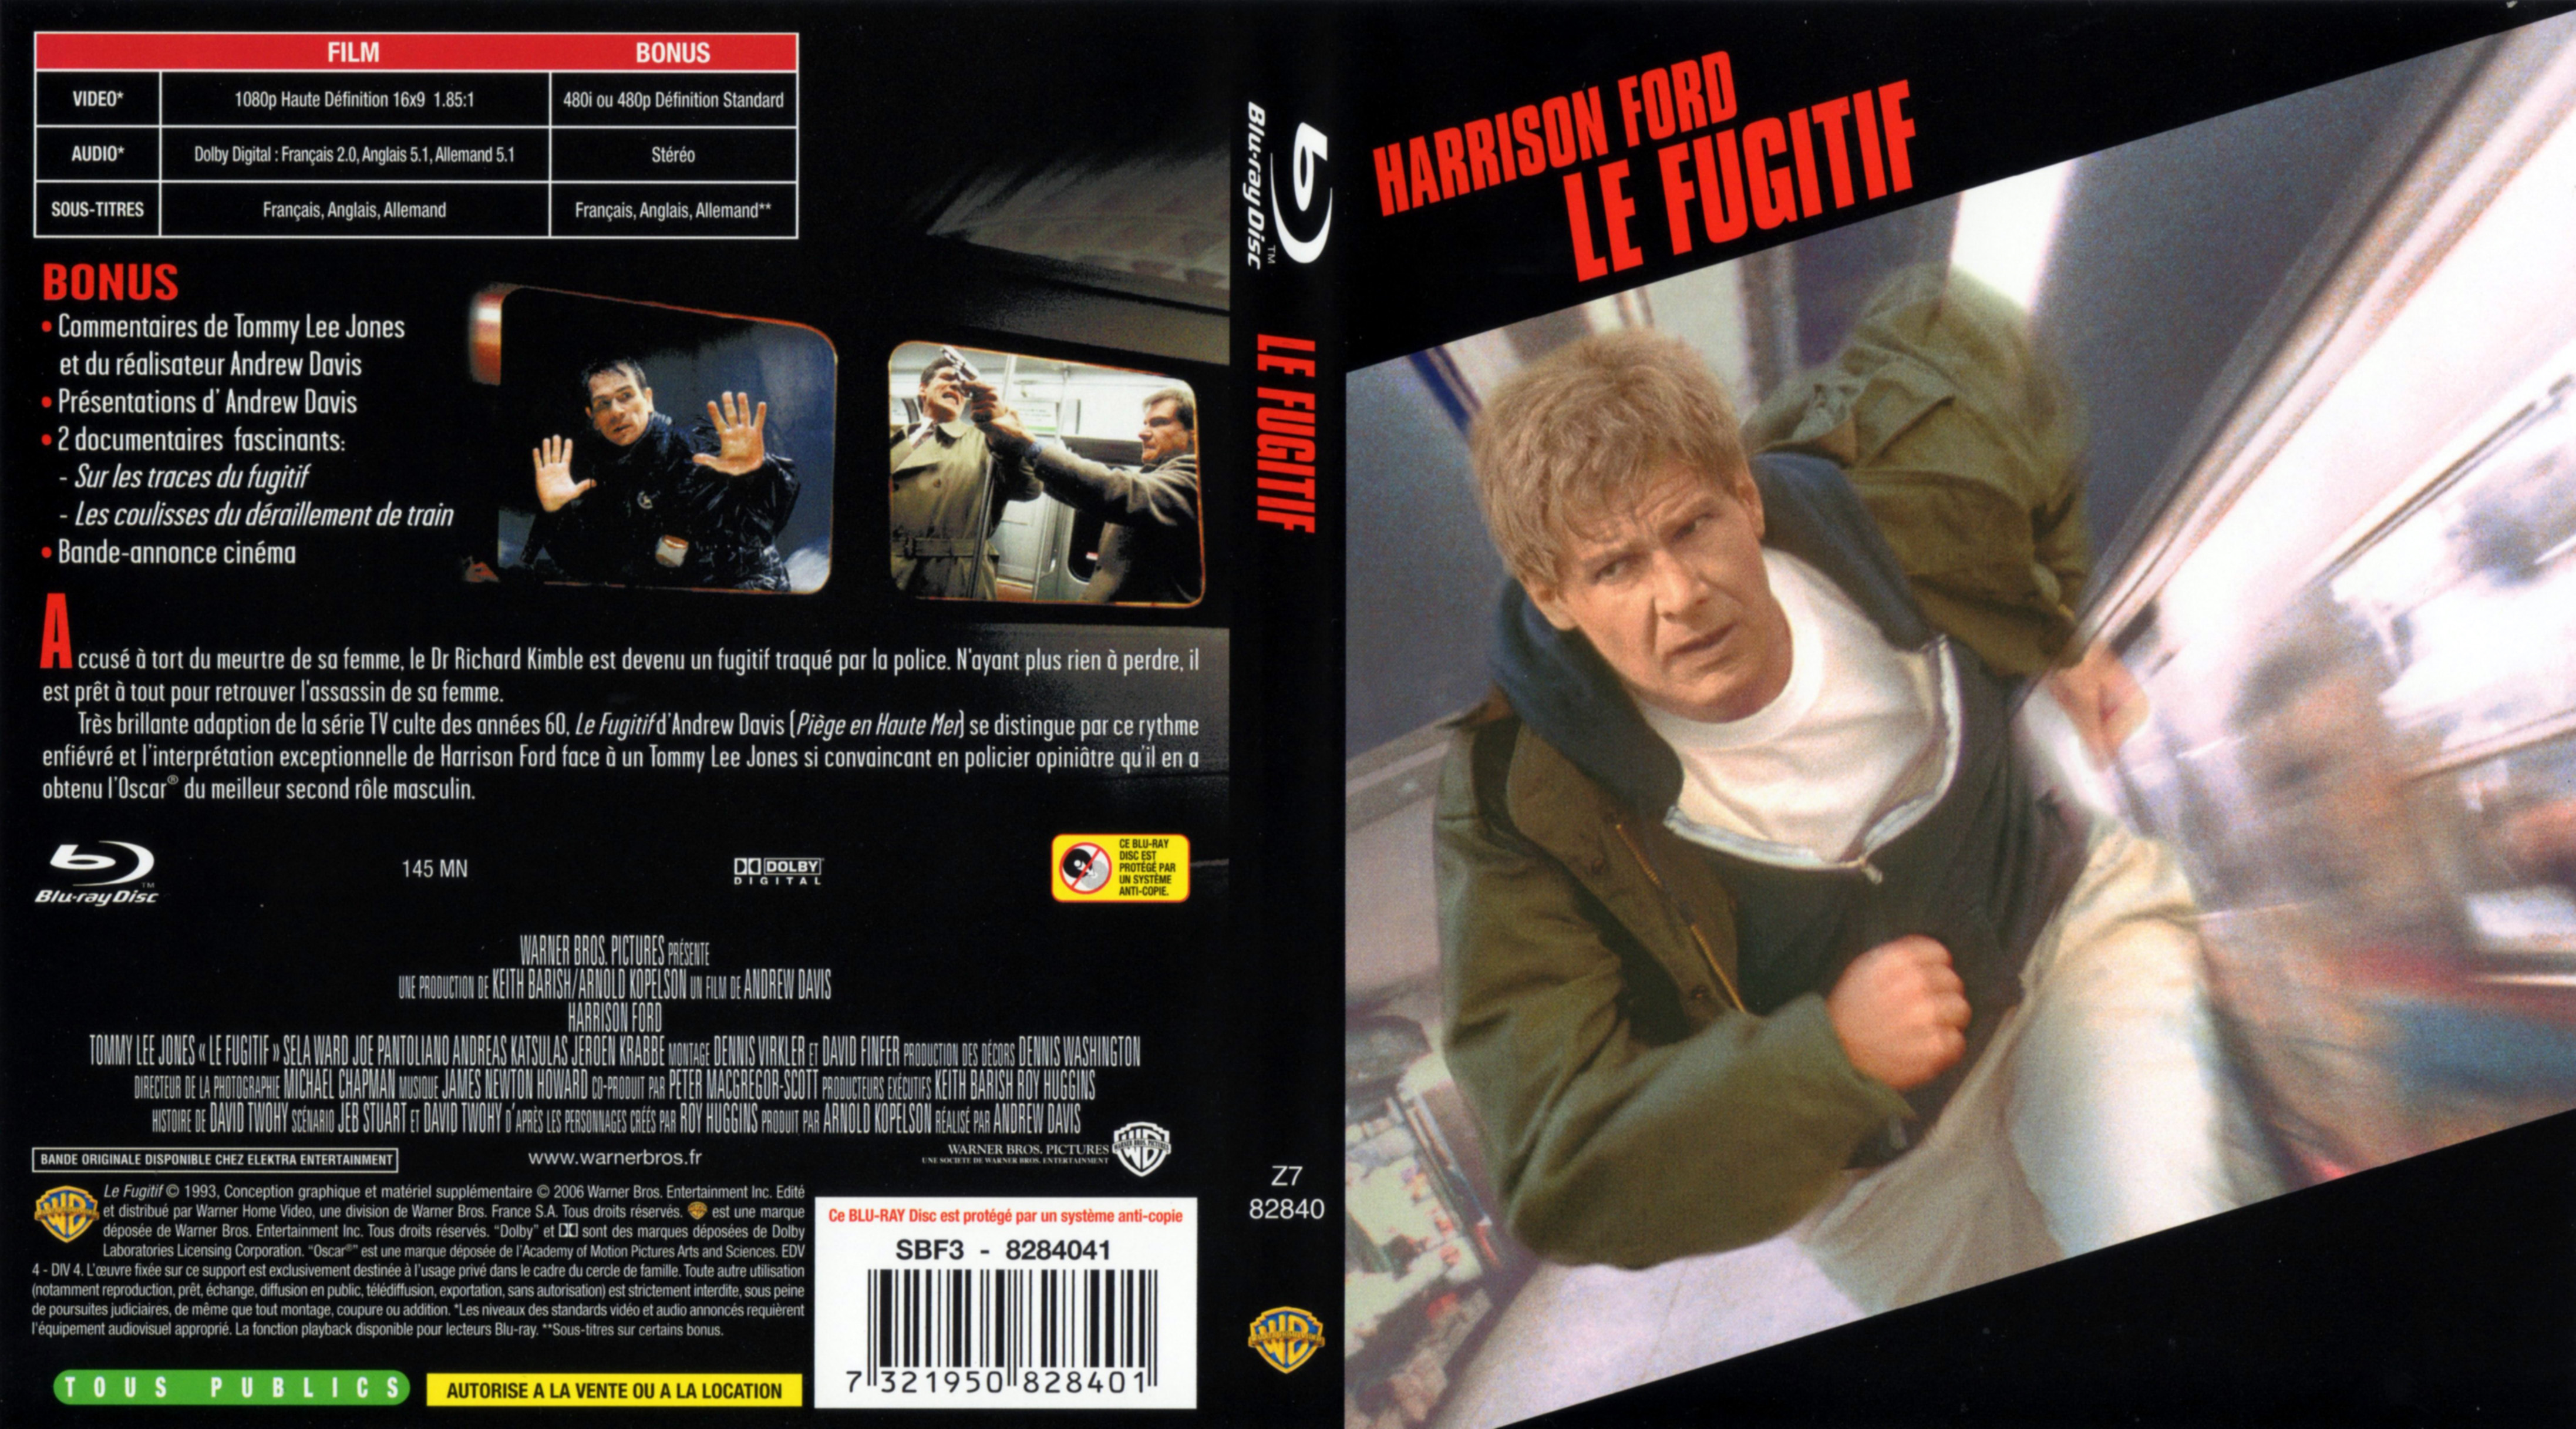 Jaquette DVD Le fugitif (BLU-RAY)